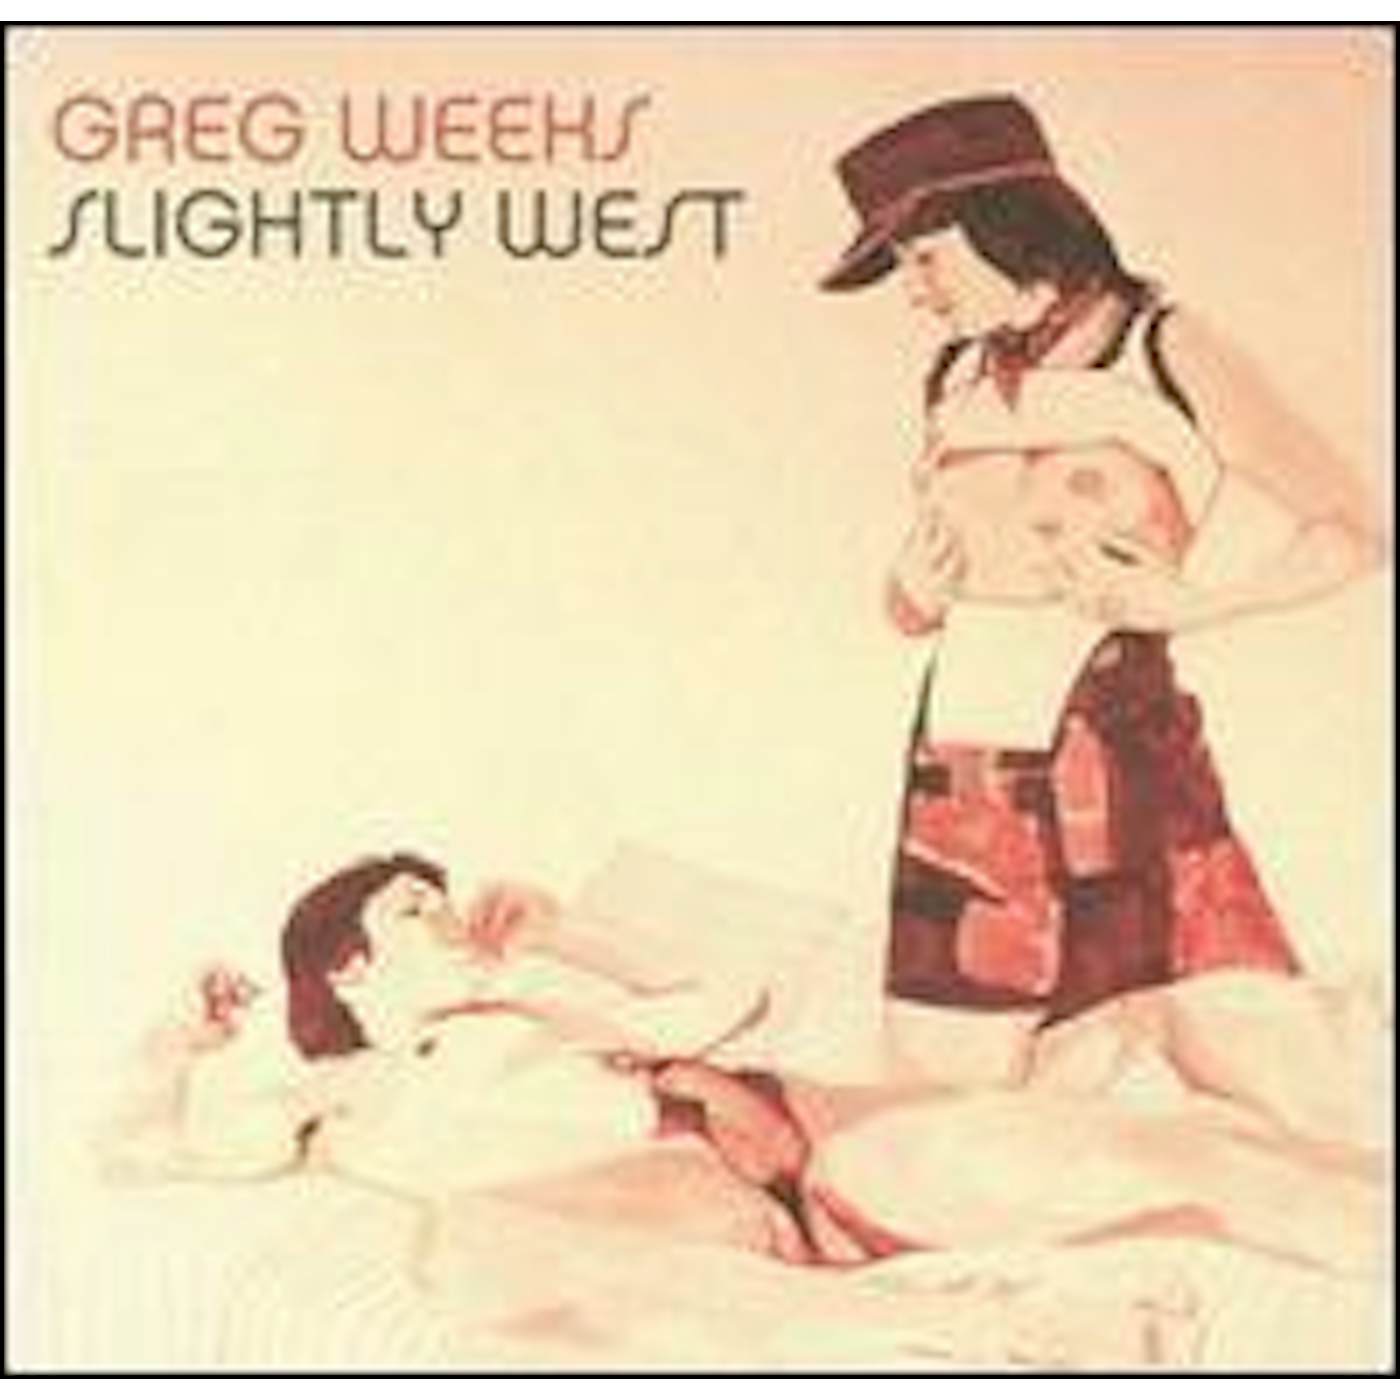 Greg Weeks SLIGHTLY WEST CD